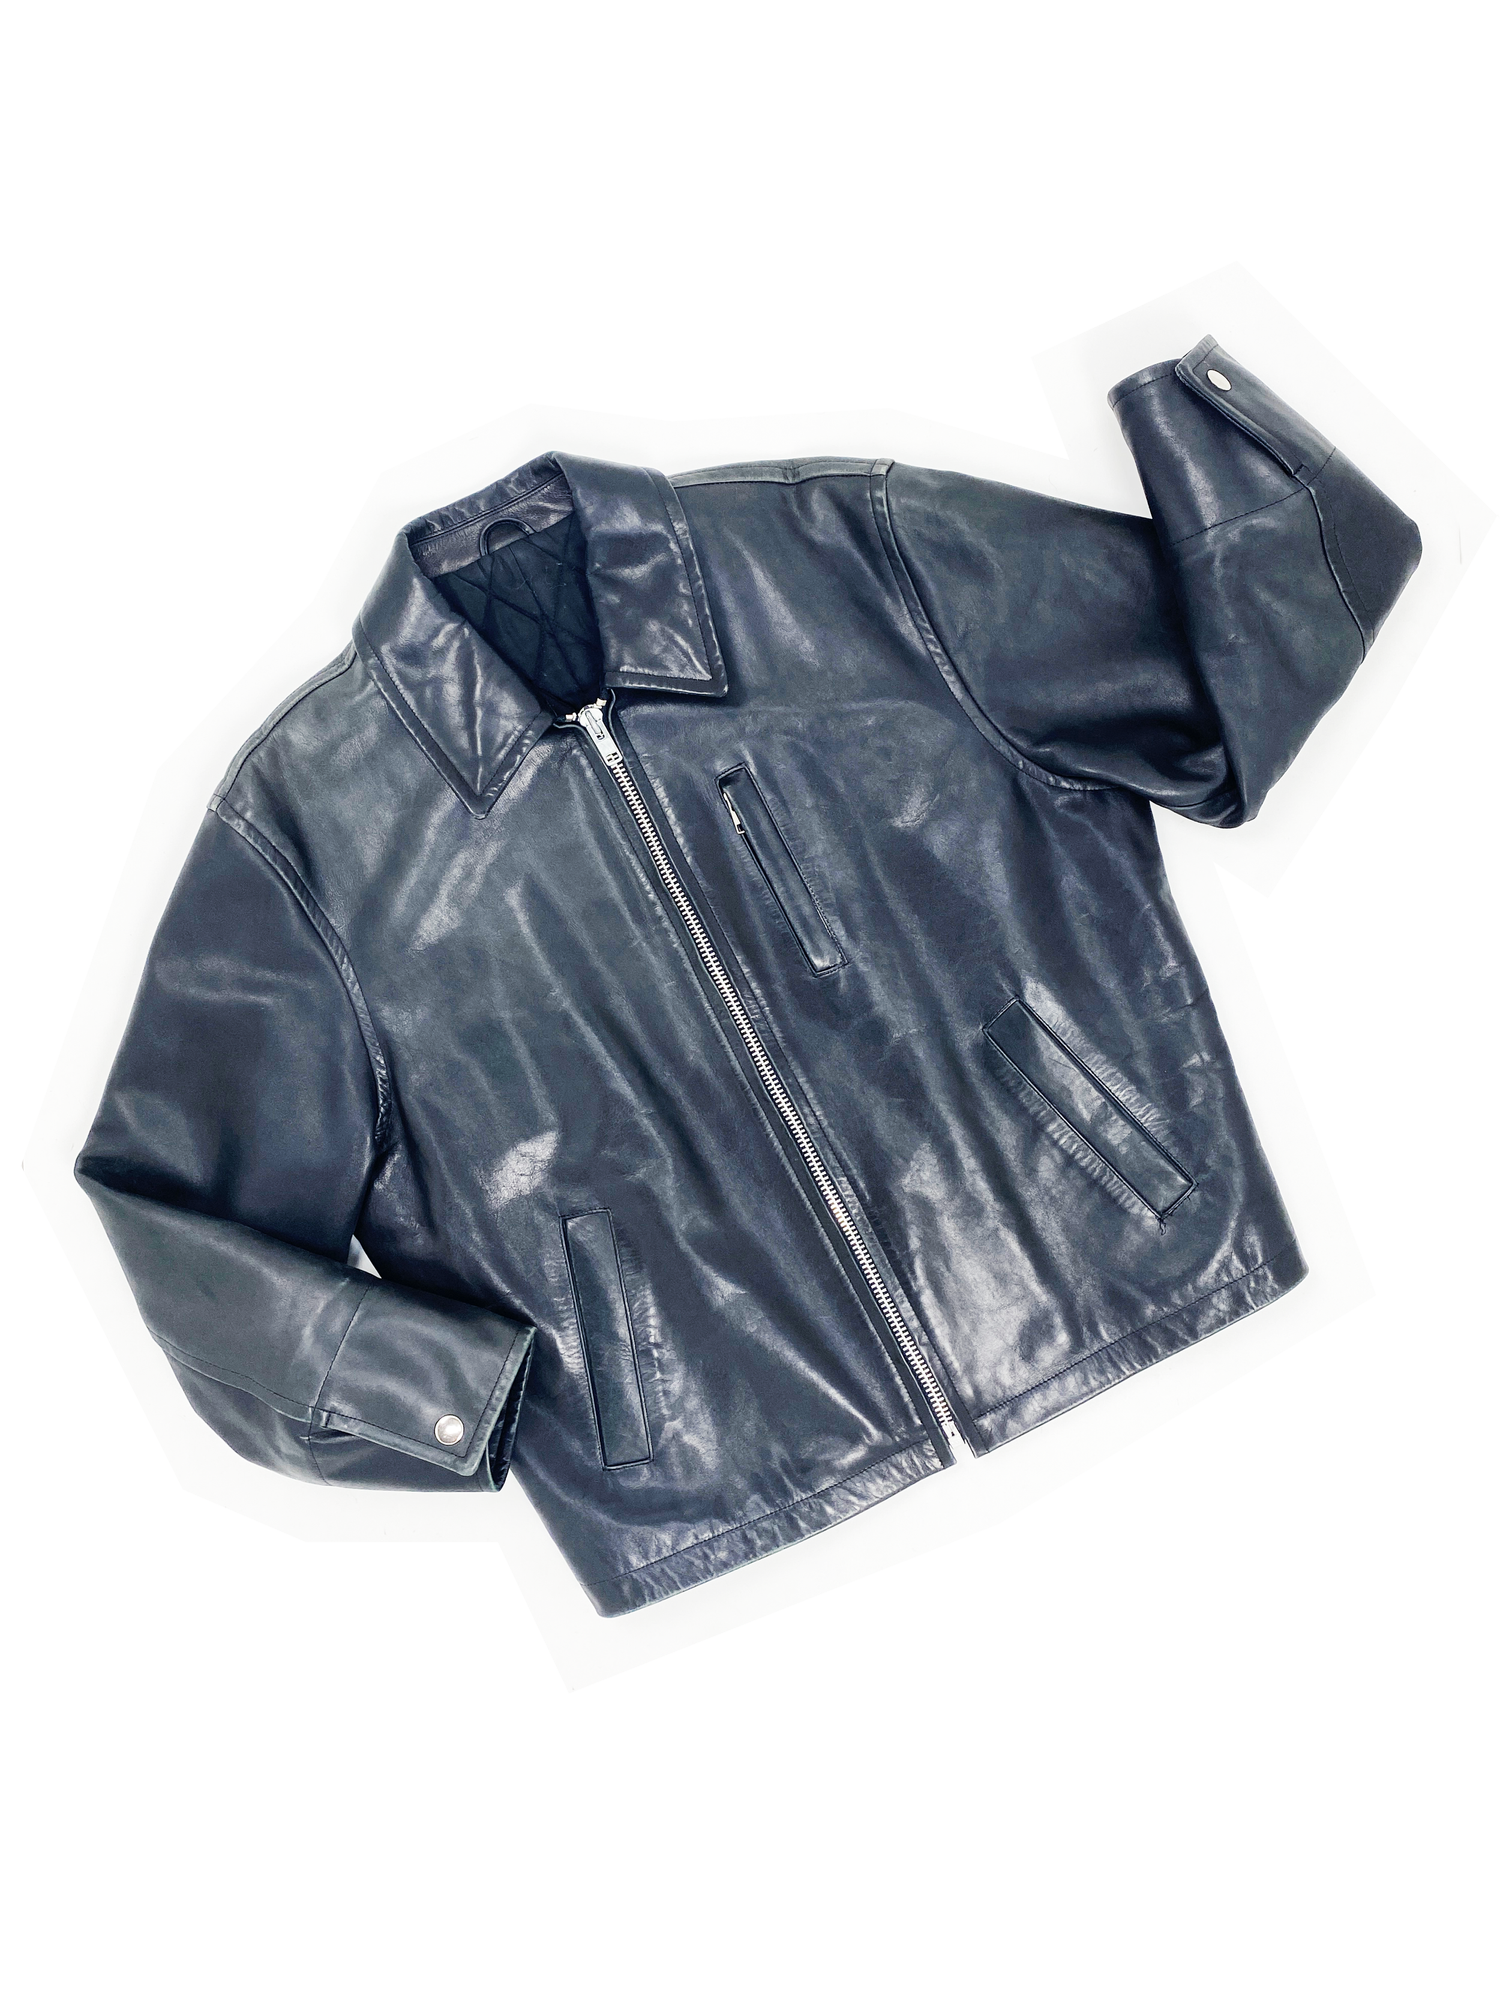 Comme des Garcons Homme F/W 1992 black leather jacket — JAMES VELORIA